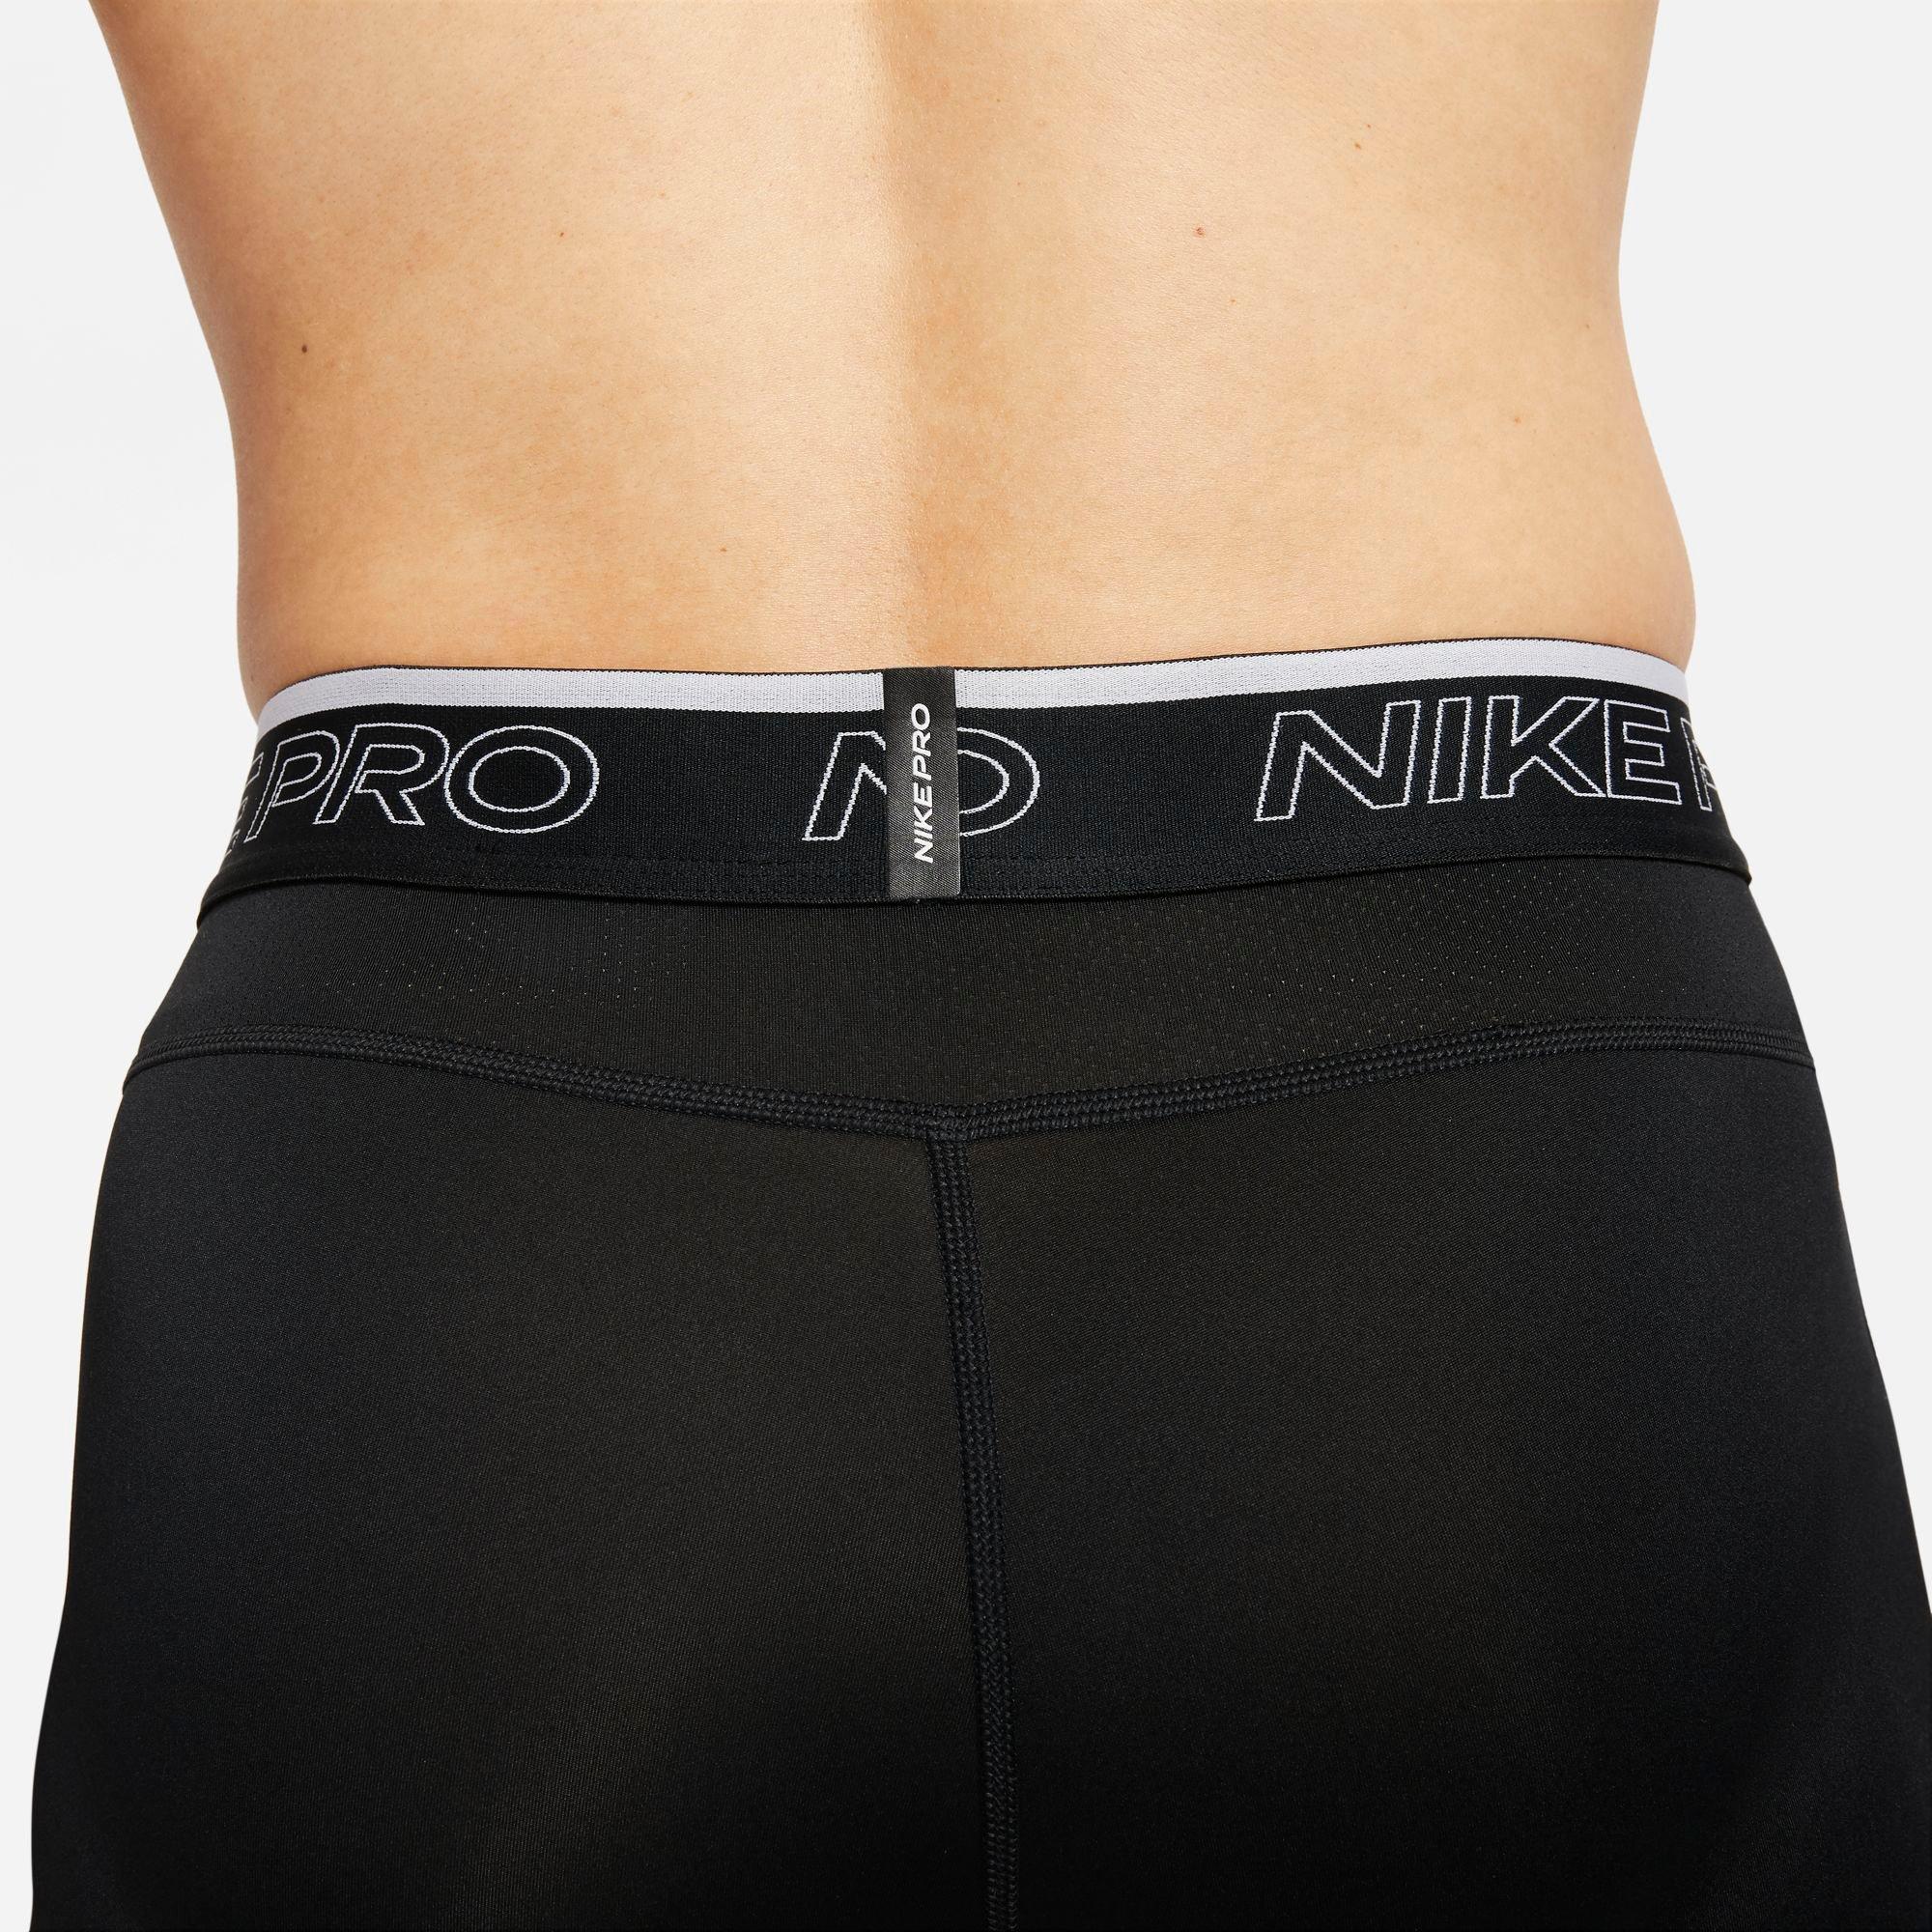 Nike Dri Fit Pro Combat Hyperwarm Shorts Base Layer Men's Large Black /Green